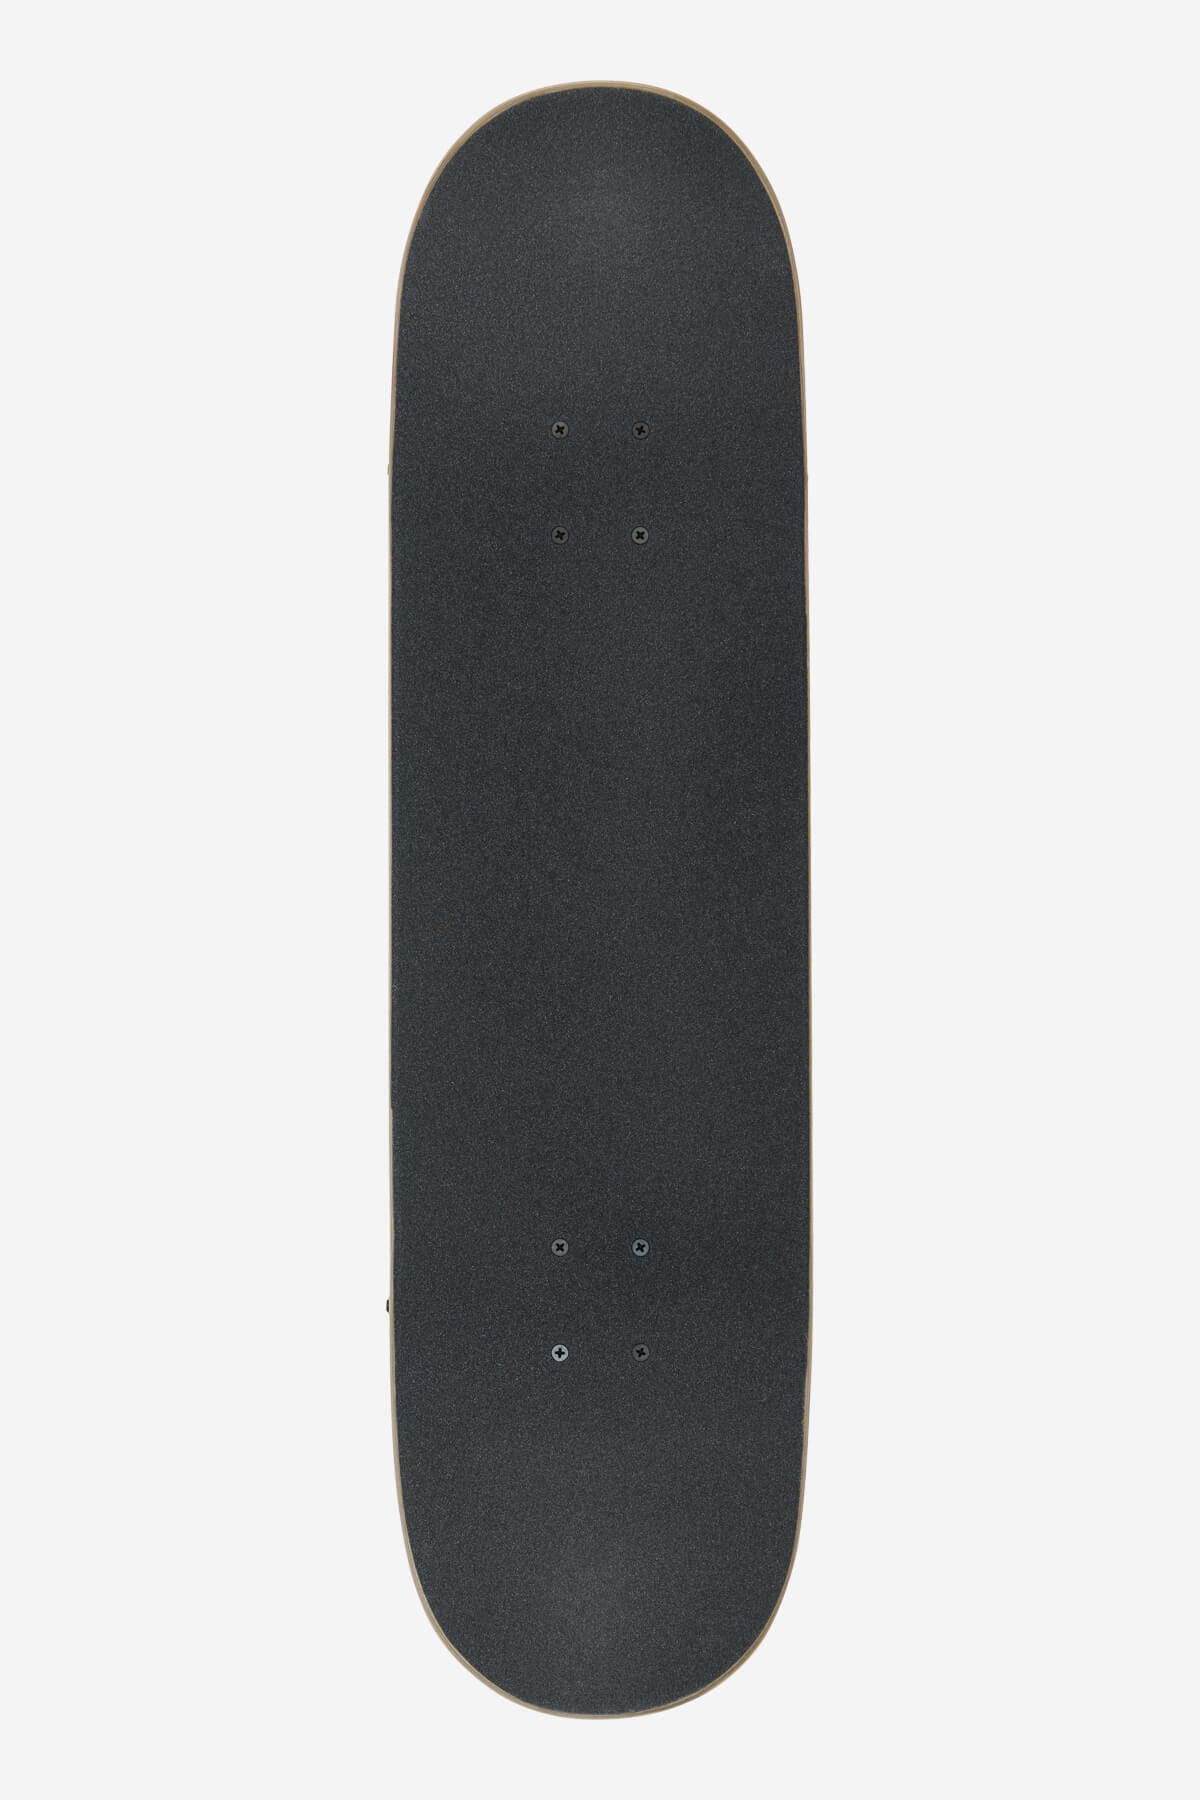 goodstock ruby 8.5" complet skateboard